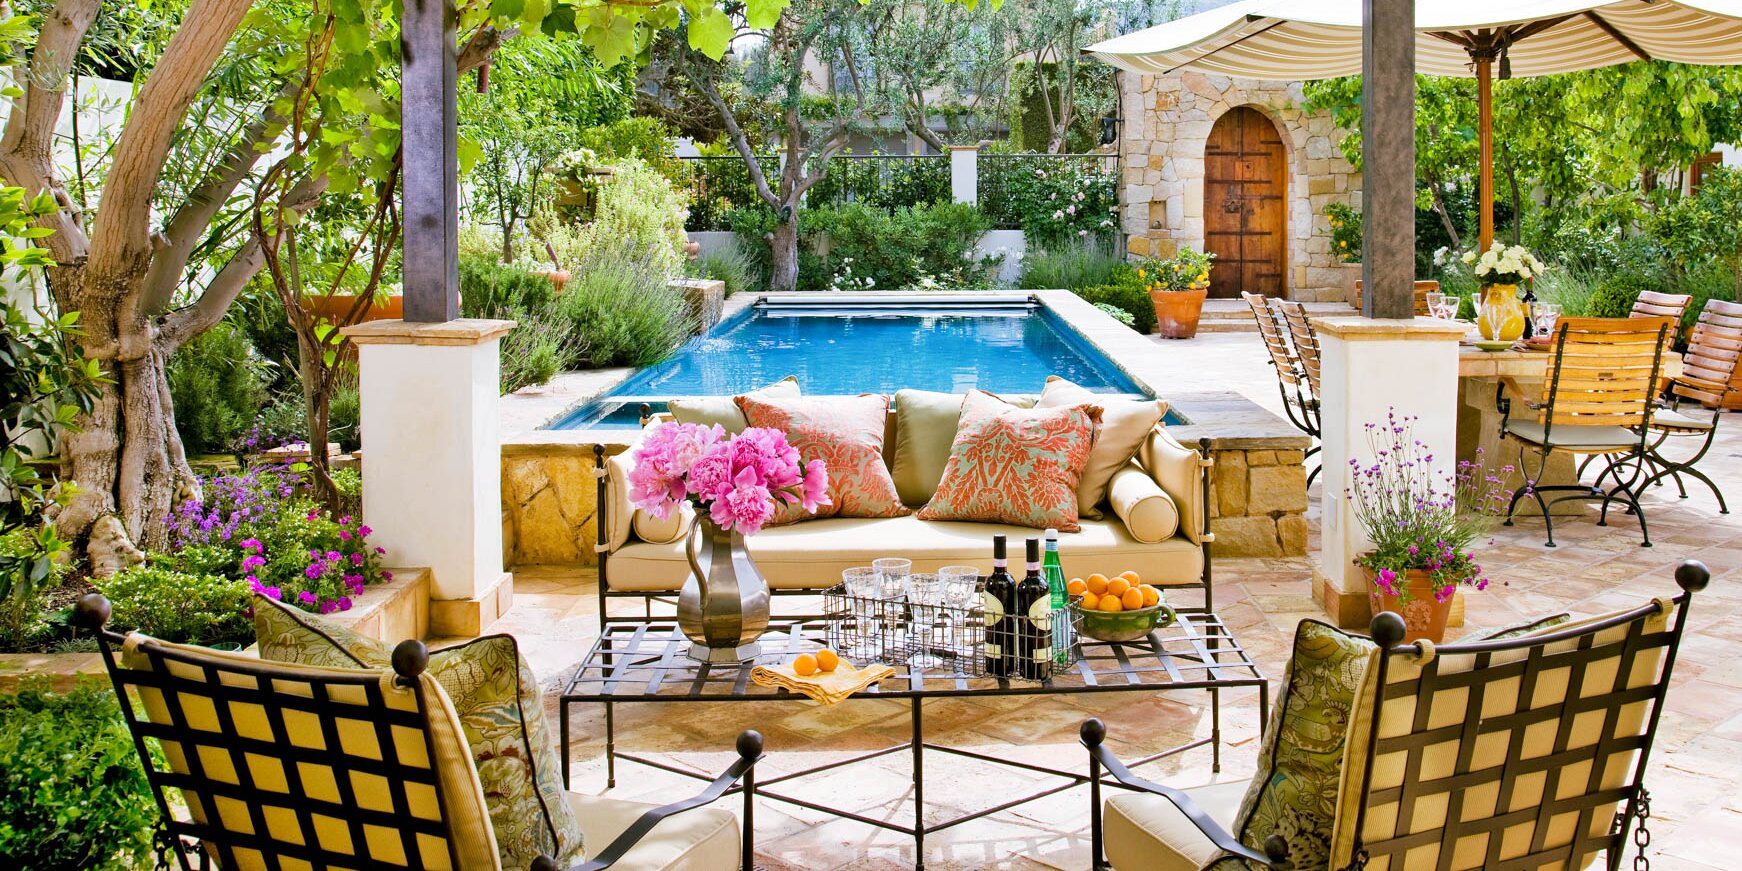 Ways to Create an Inviting Backyard Getaway